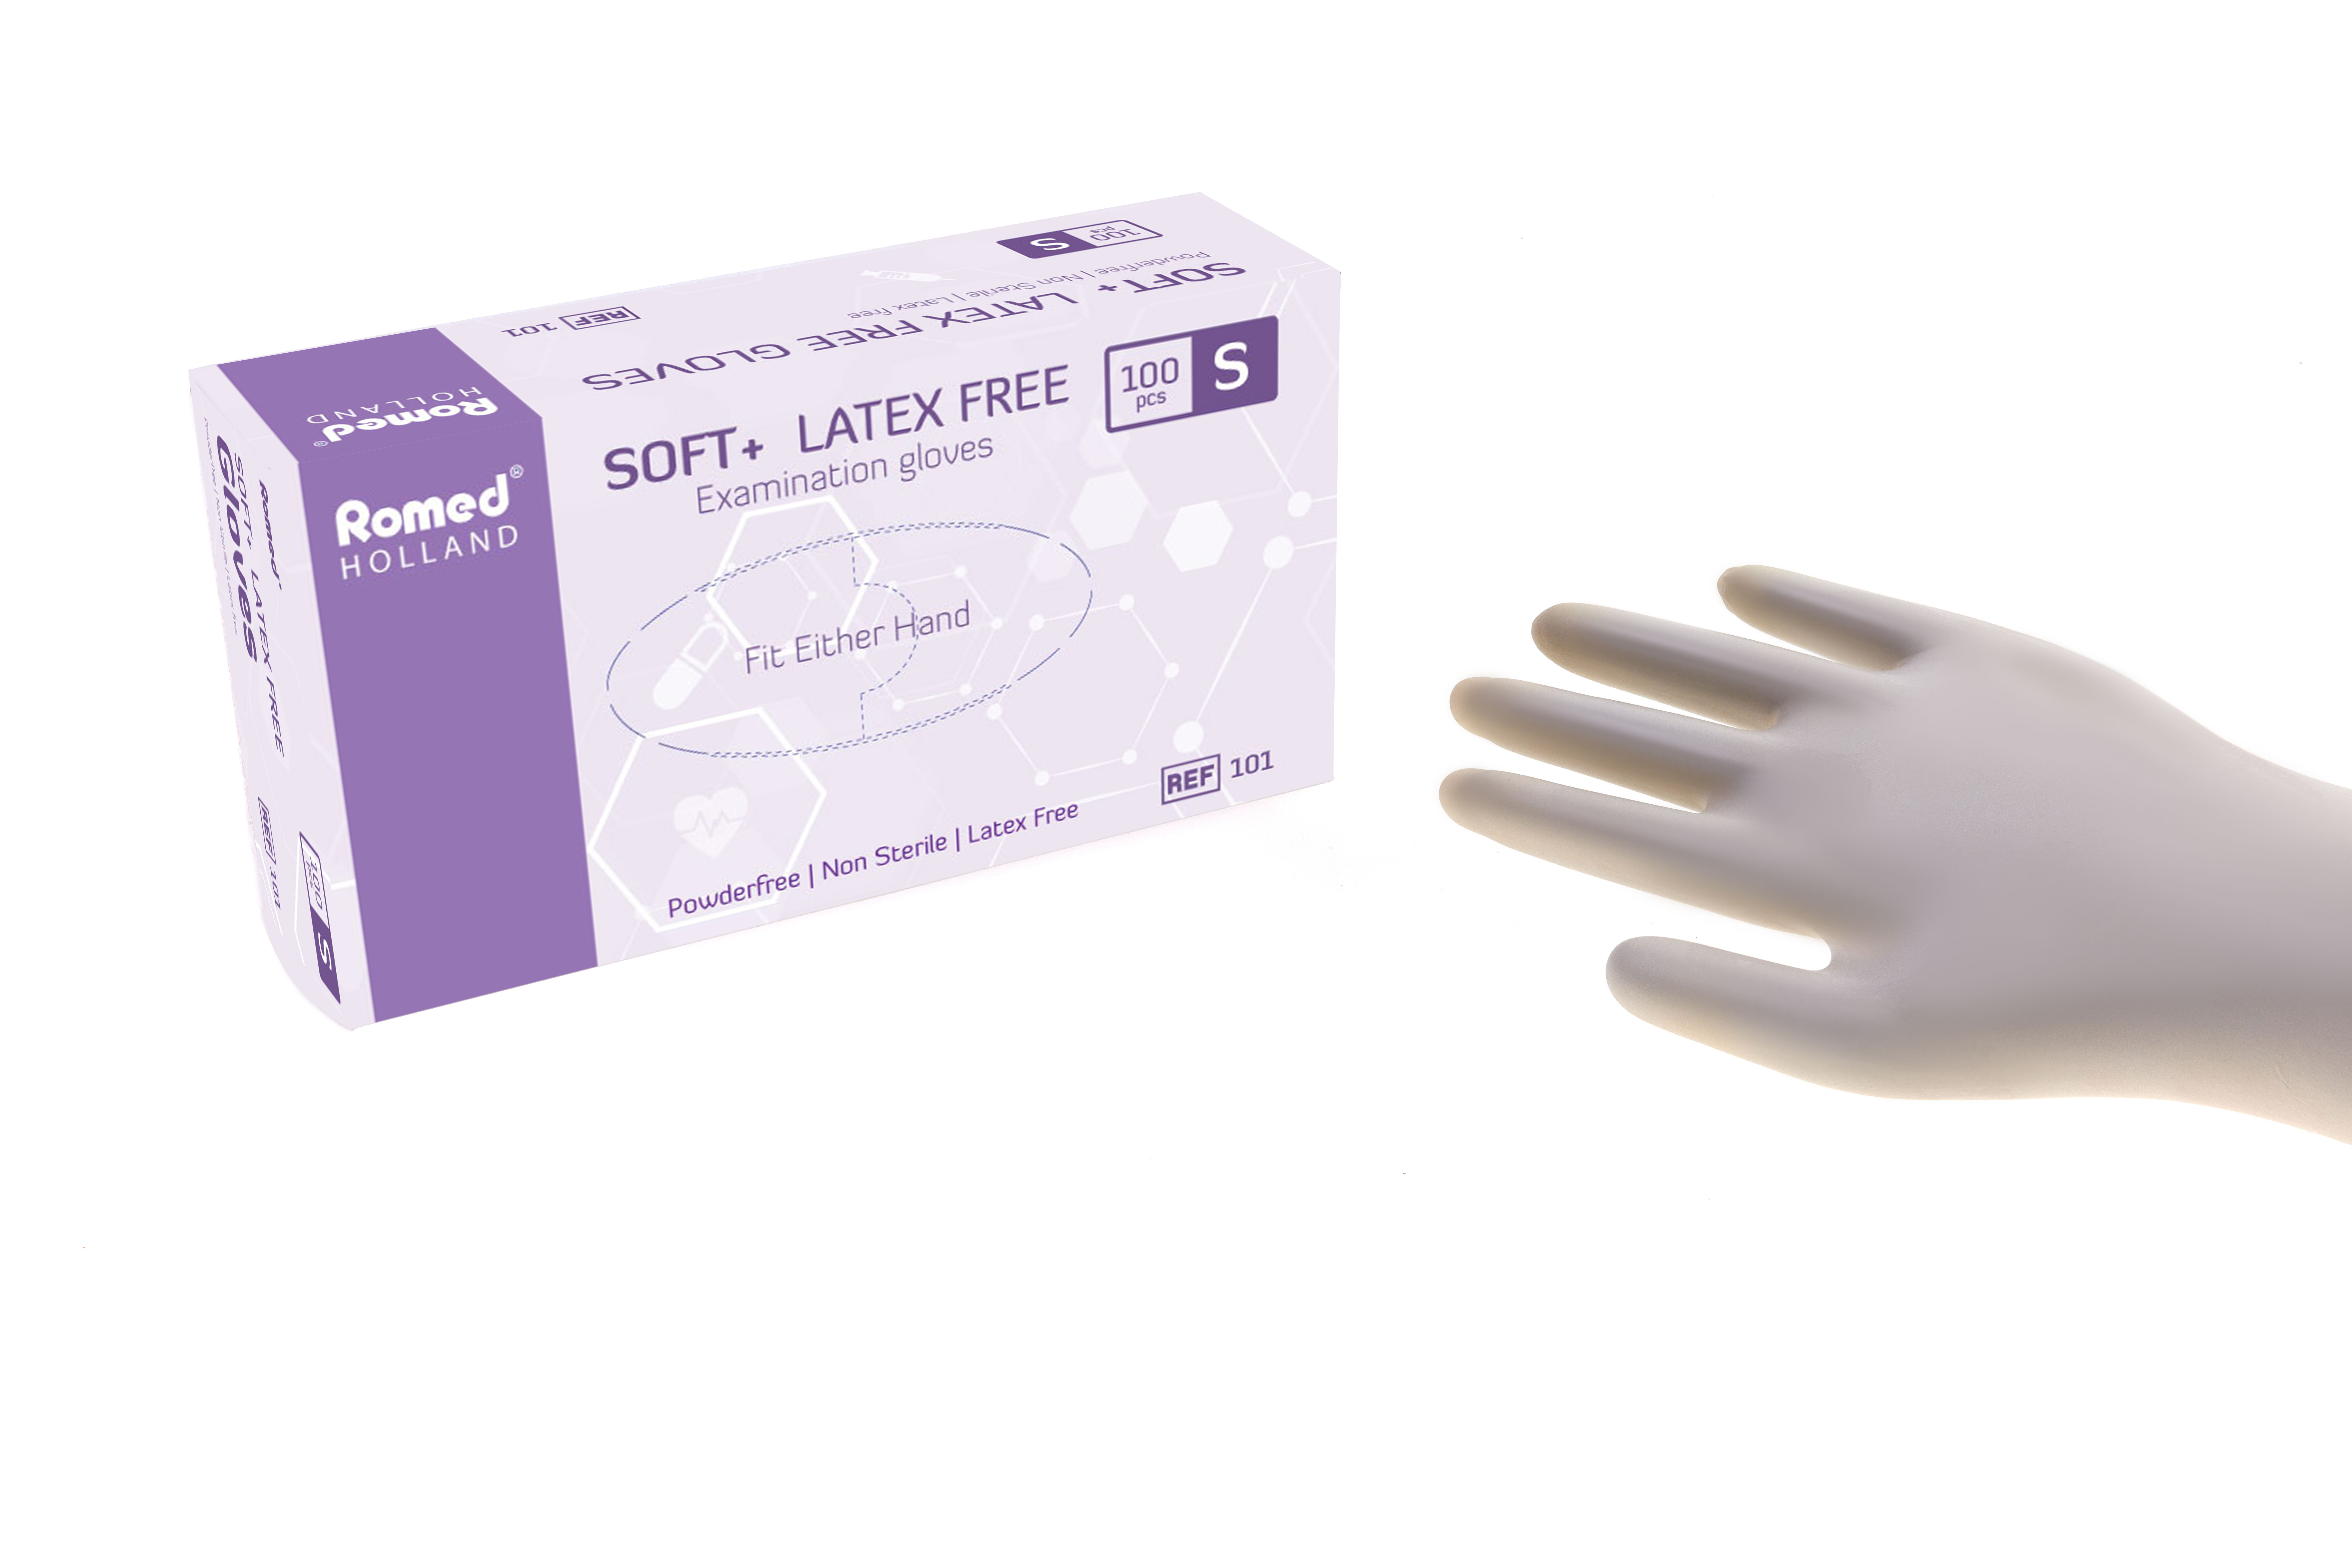 101 Romed Soft+ latex free examination gloves, non sterile, powderfree, small, per 100 pcs in a dispenser box, 10 x 100 pcs = 1.000 pcs in a carton.